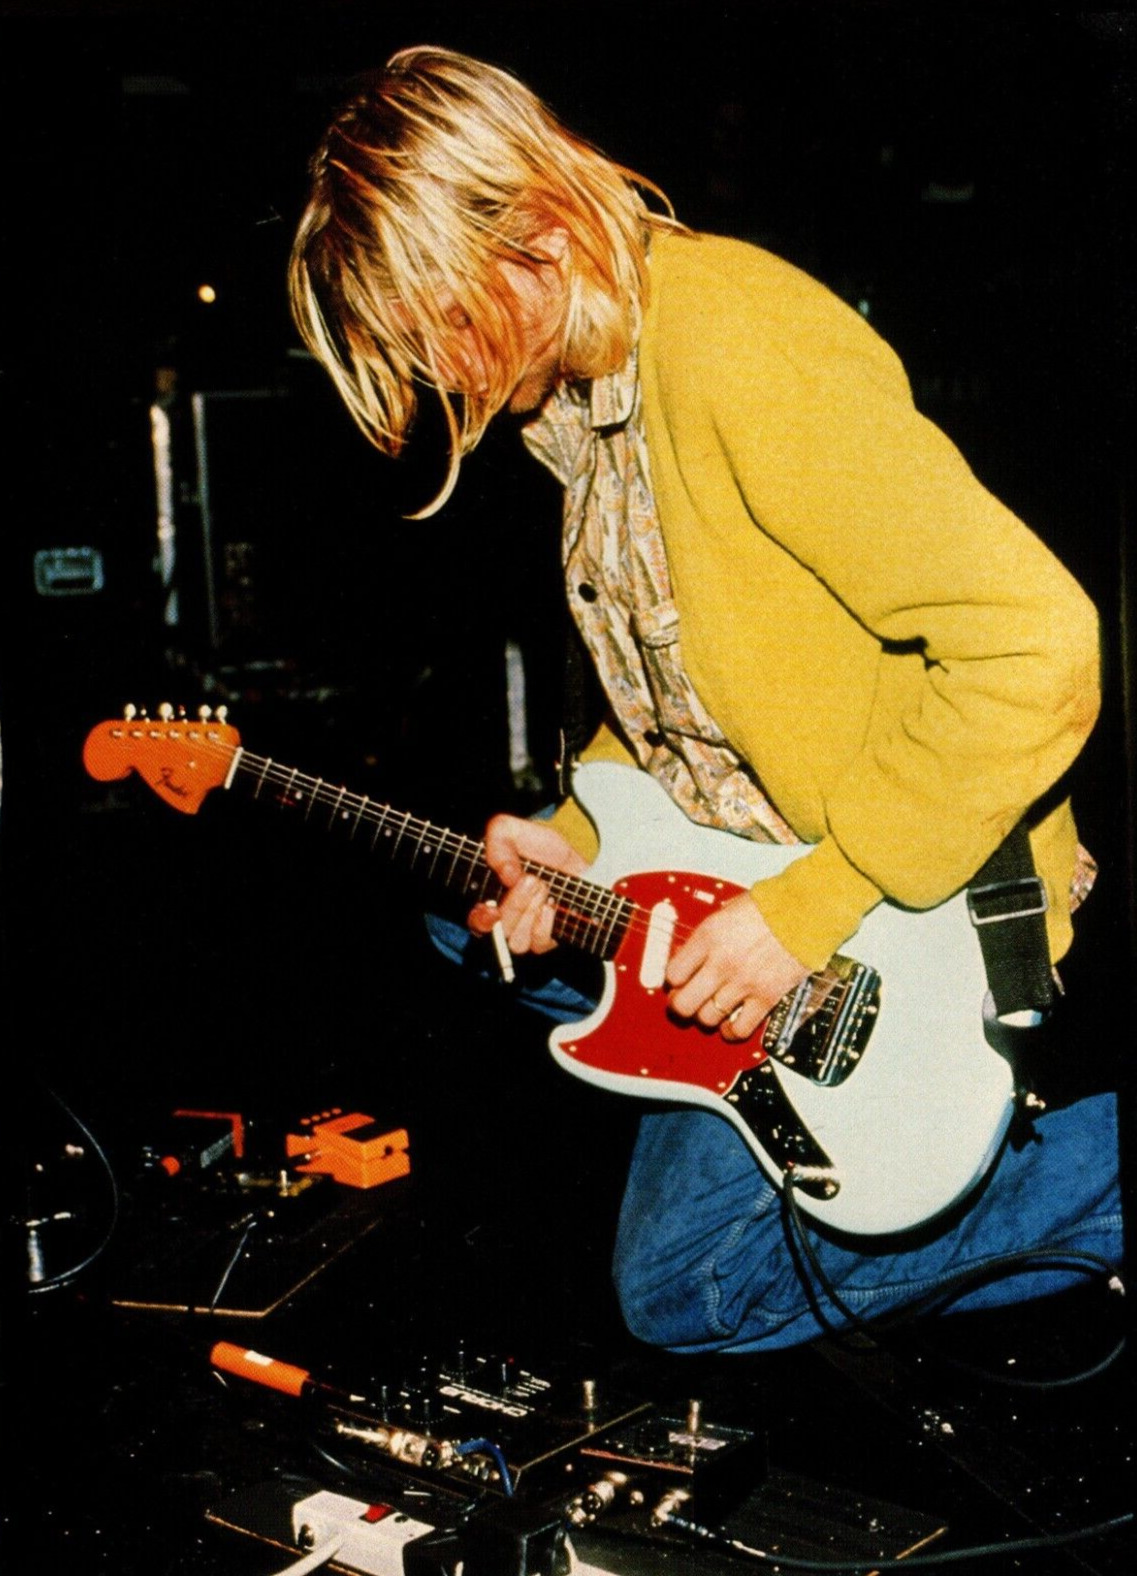 vtg 90s KURT COBAIN MAGAZINE PINUP PAGE Nirvana Concert Effect Pedals Print Ad